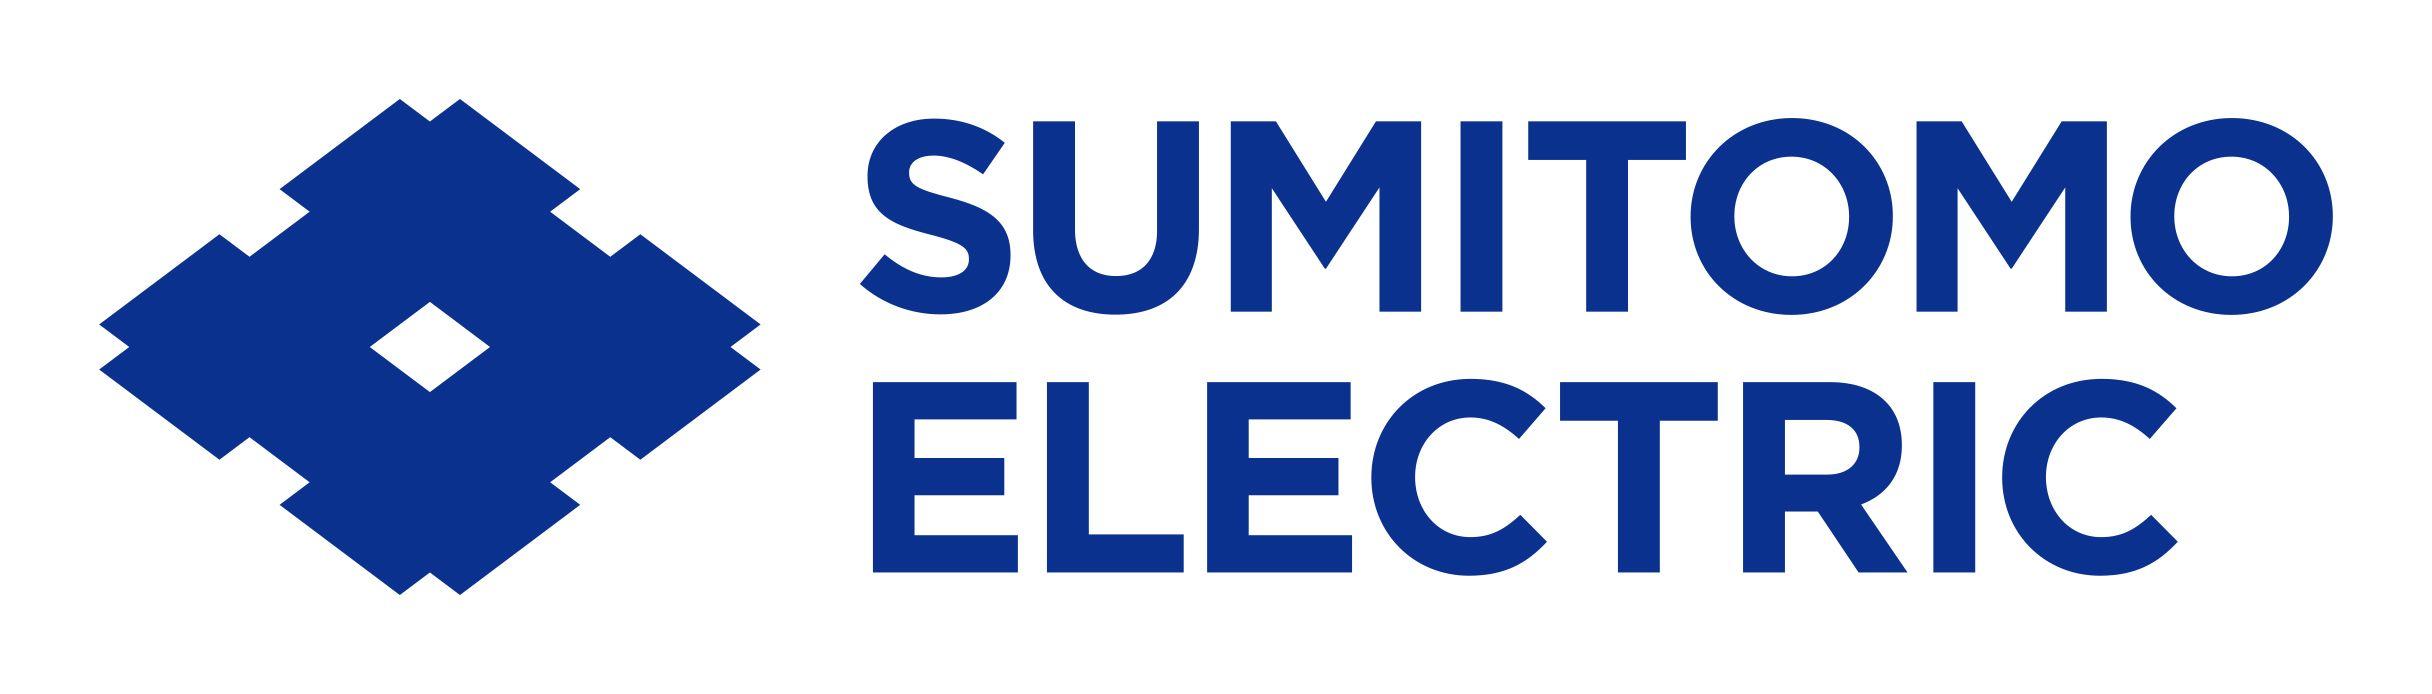 Sumitomo Logo - Sumitomo Electric. EMS Partners. Heat Shrinkable Plastic Technology